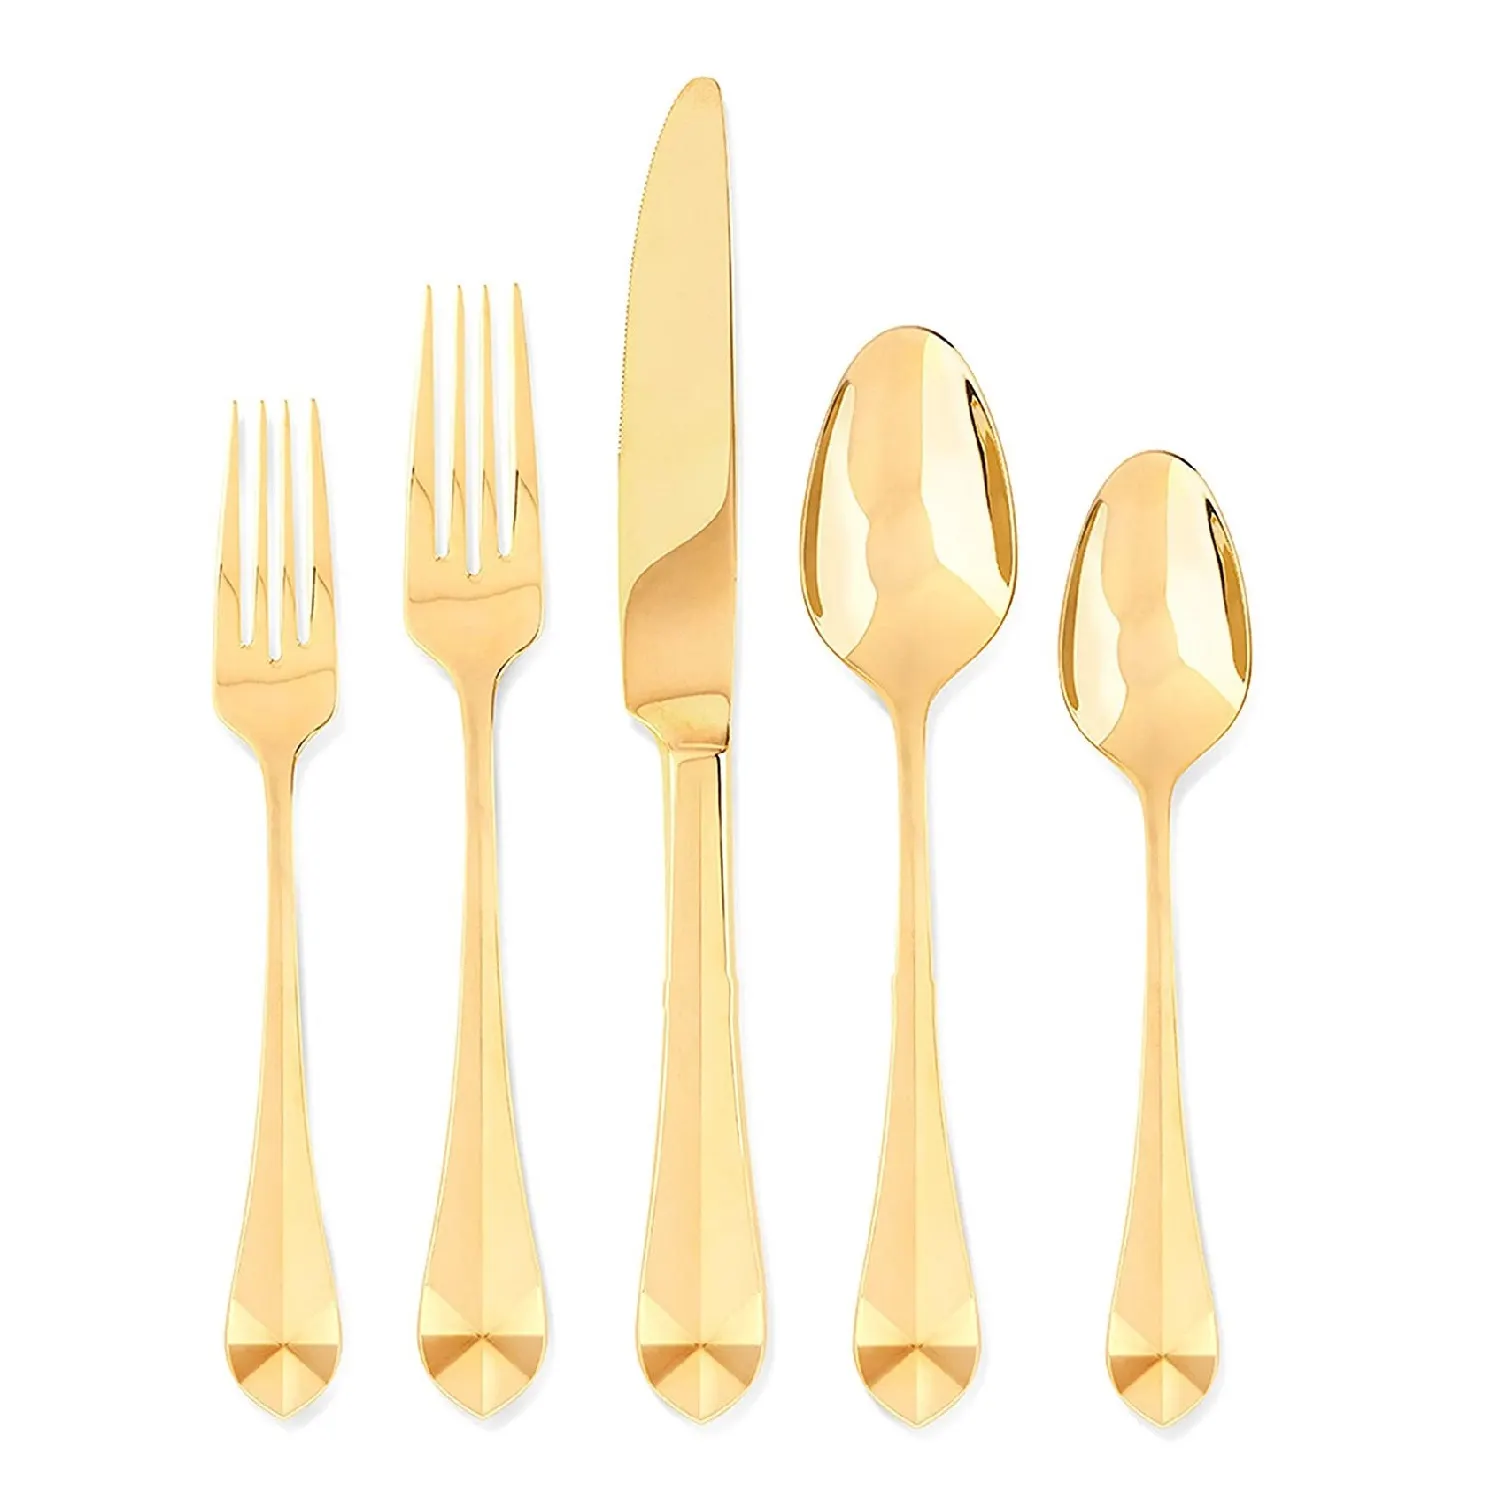 Wholesale restaurant luxury gold spoon fork & knife set of 5 flatware cutlery sets best selling stainless steel cutlery